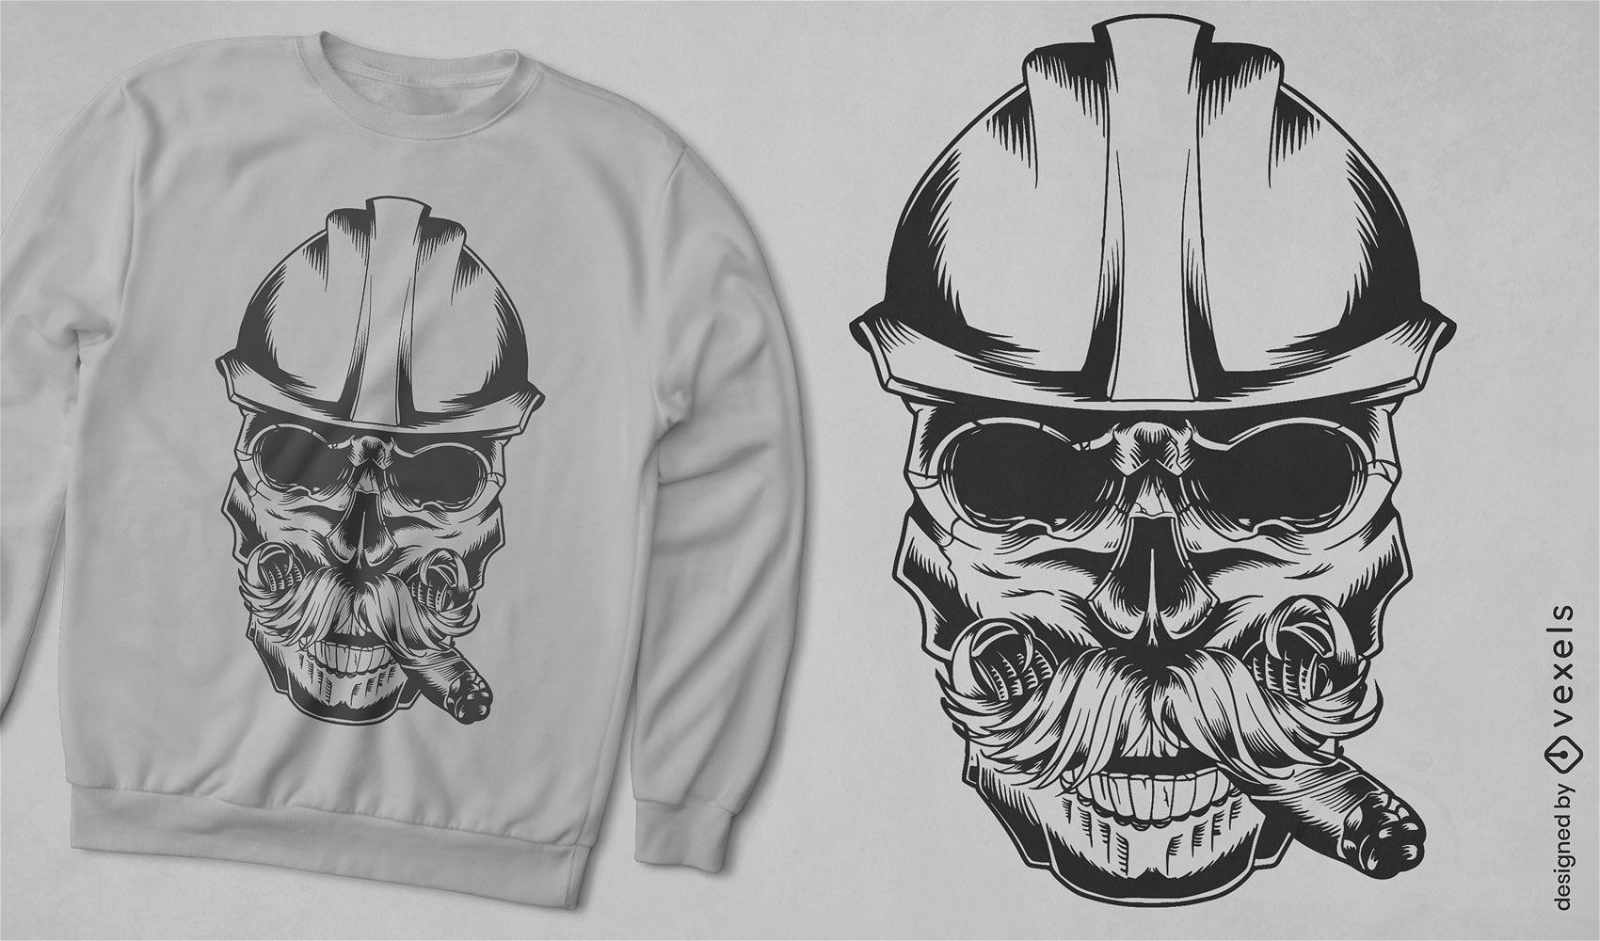 Skull with helmet smoking t-shirt design